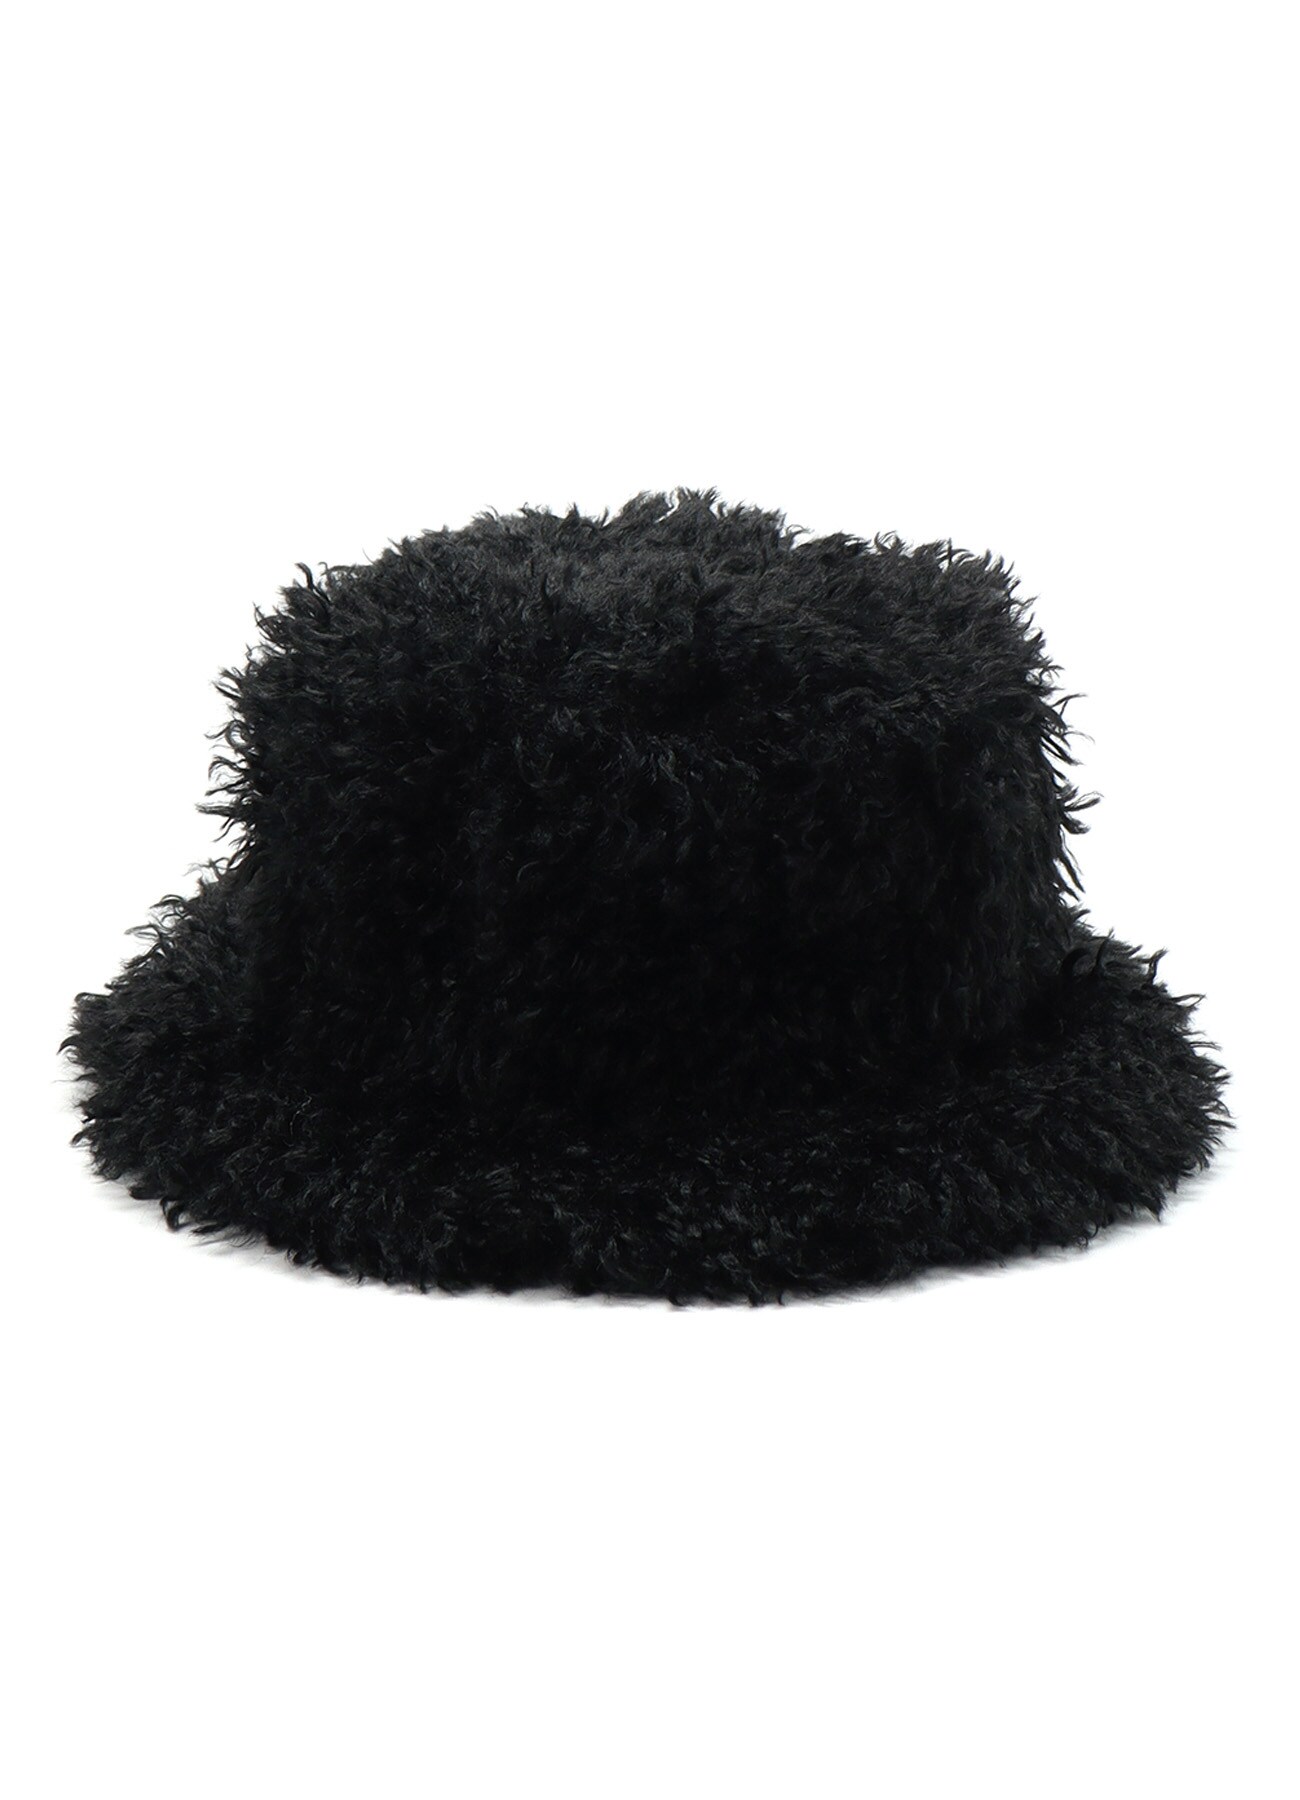 Pe/Poodle Fur Bowler Hat